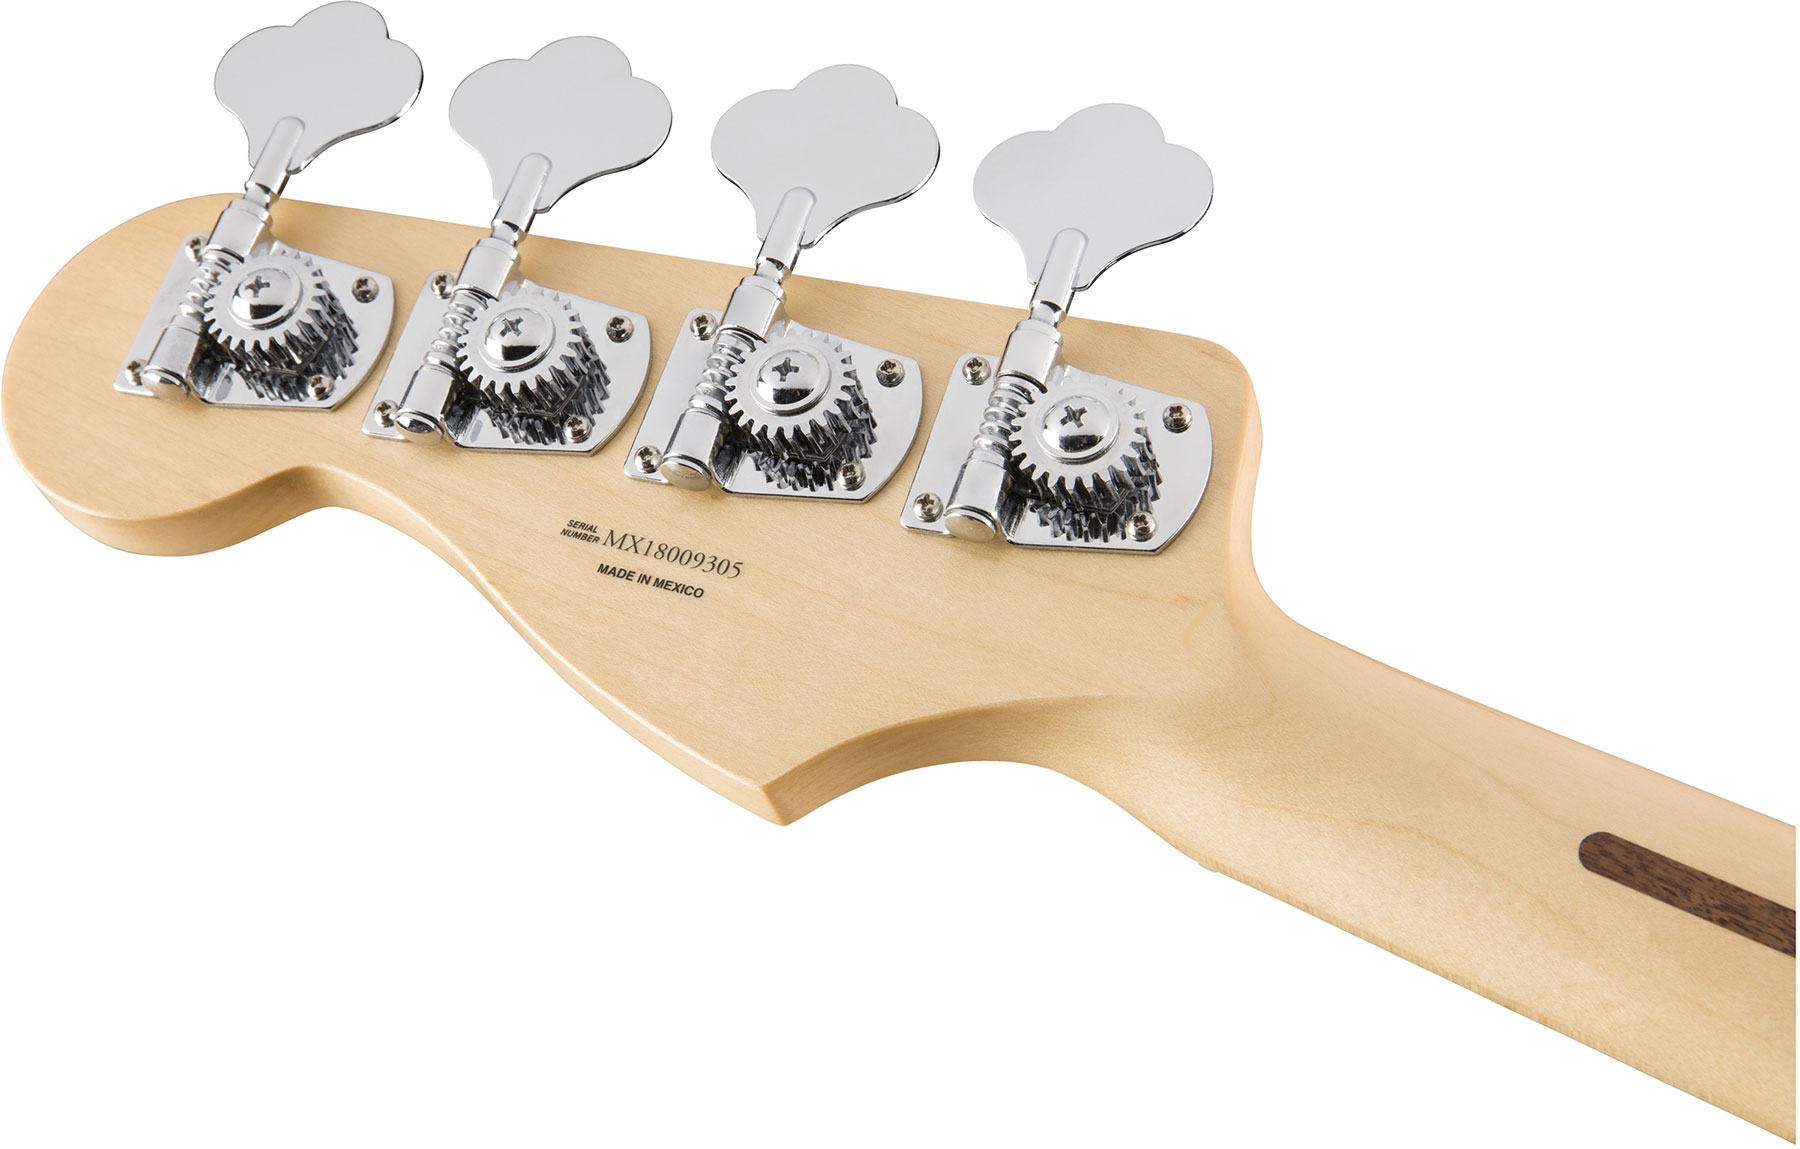 Fender Jaguar Bass Player Mex Mn - Tidepool - Solidbody E-bass - Variation 4